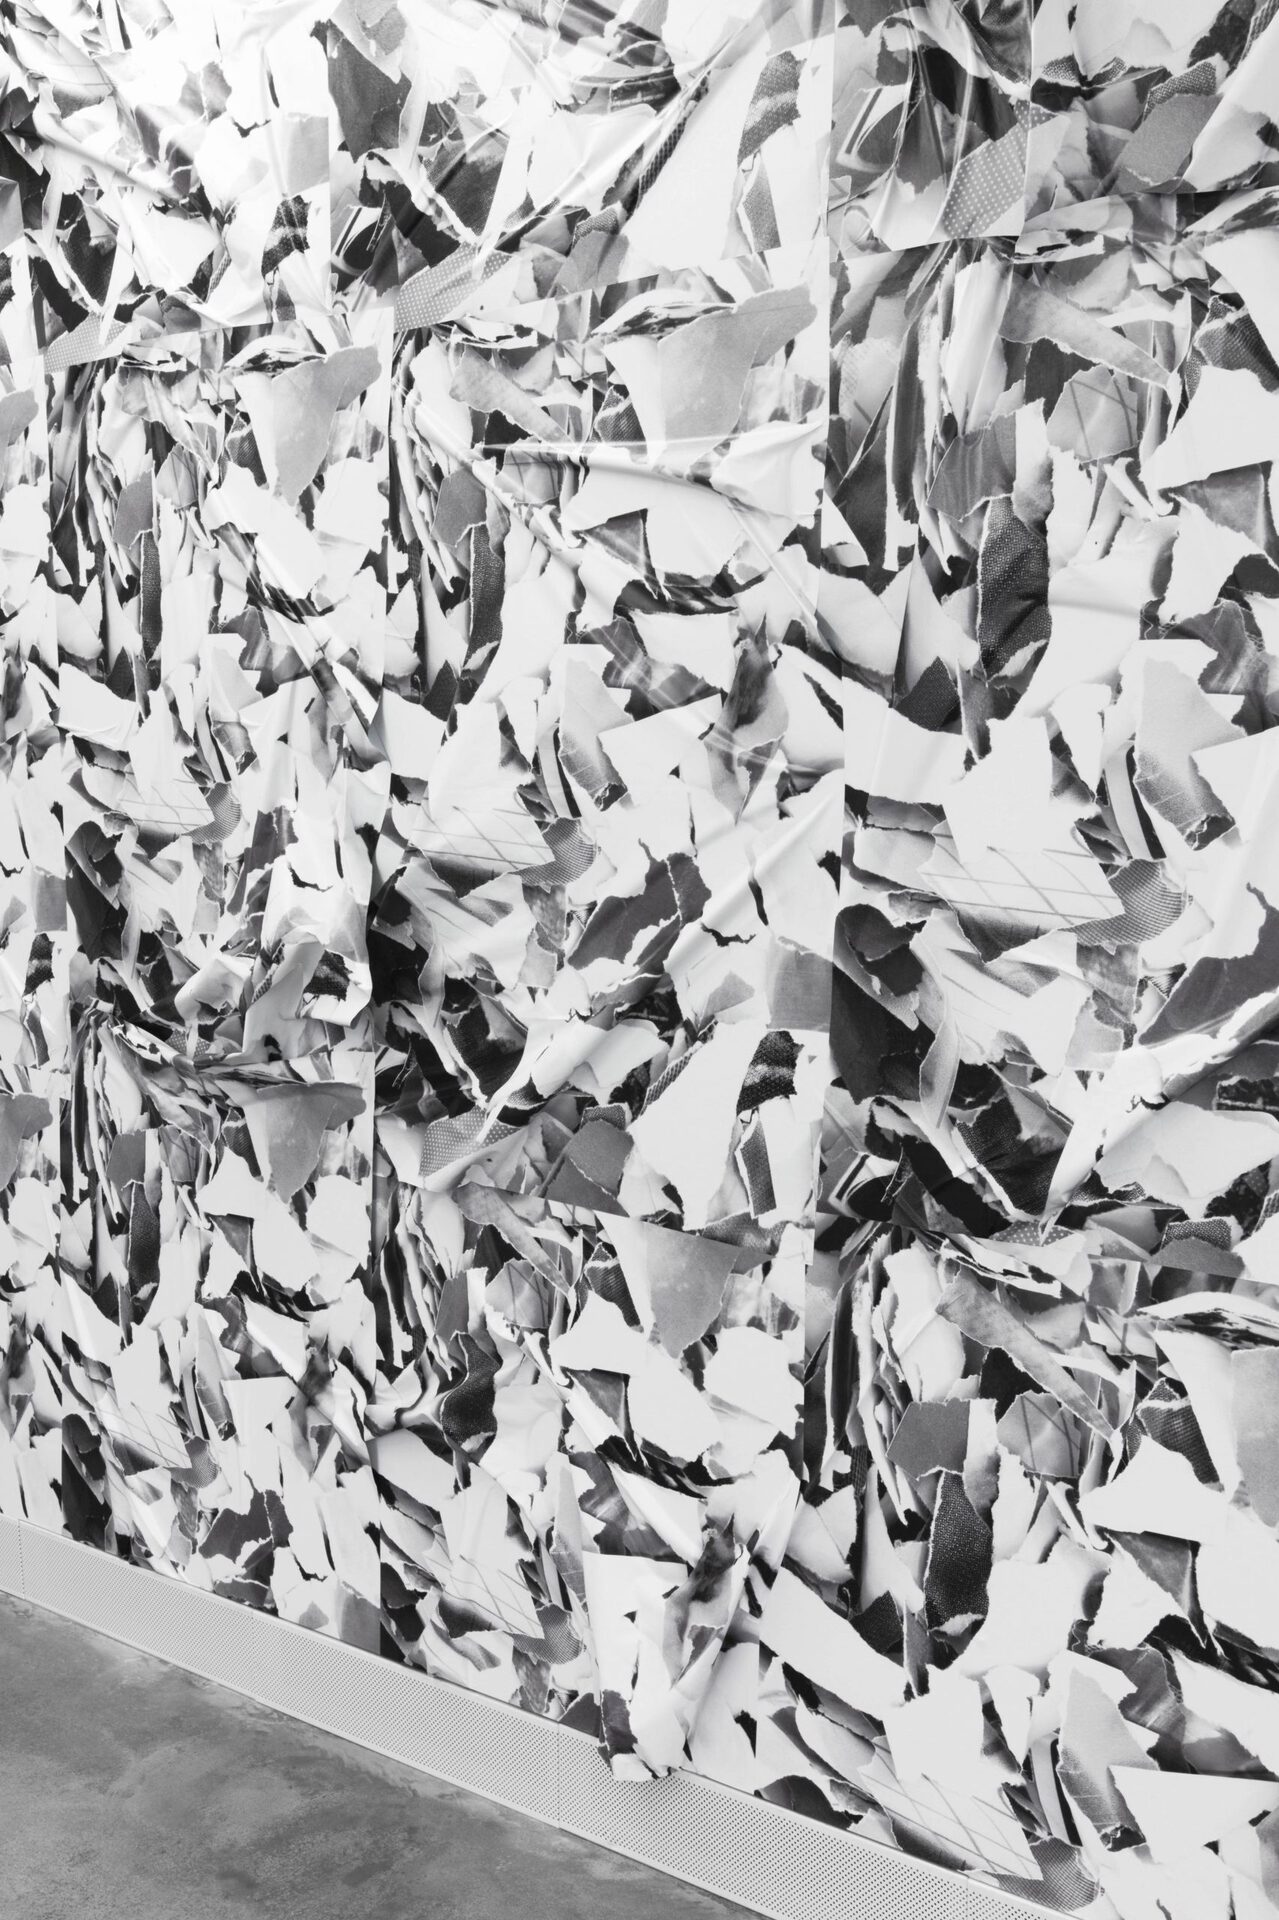 Katarína Dubovská ‚UPATEOA_hybrid (Image Mass, Moulded)‘ image fragments, synthetic material, tensioners, 360 x 360 cm, 2018/2019